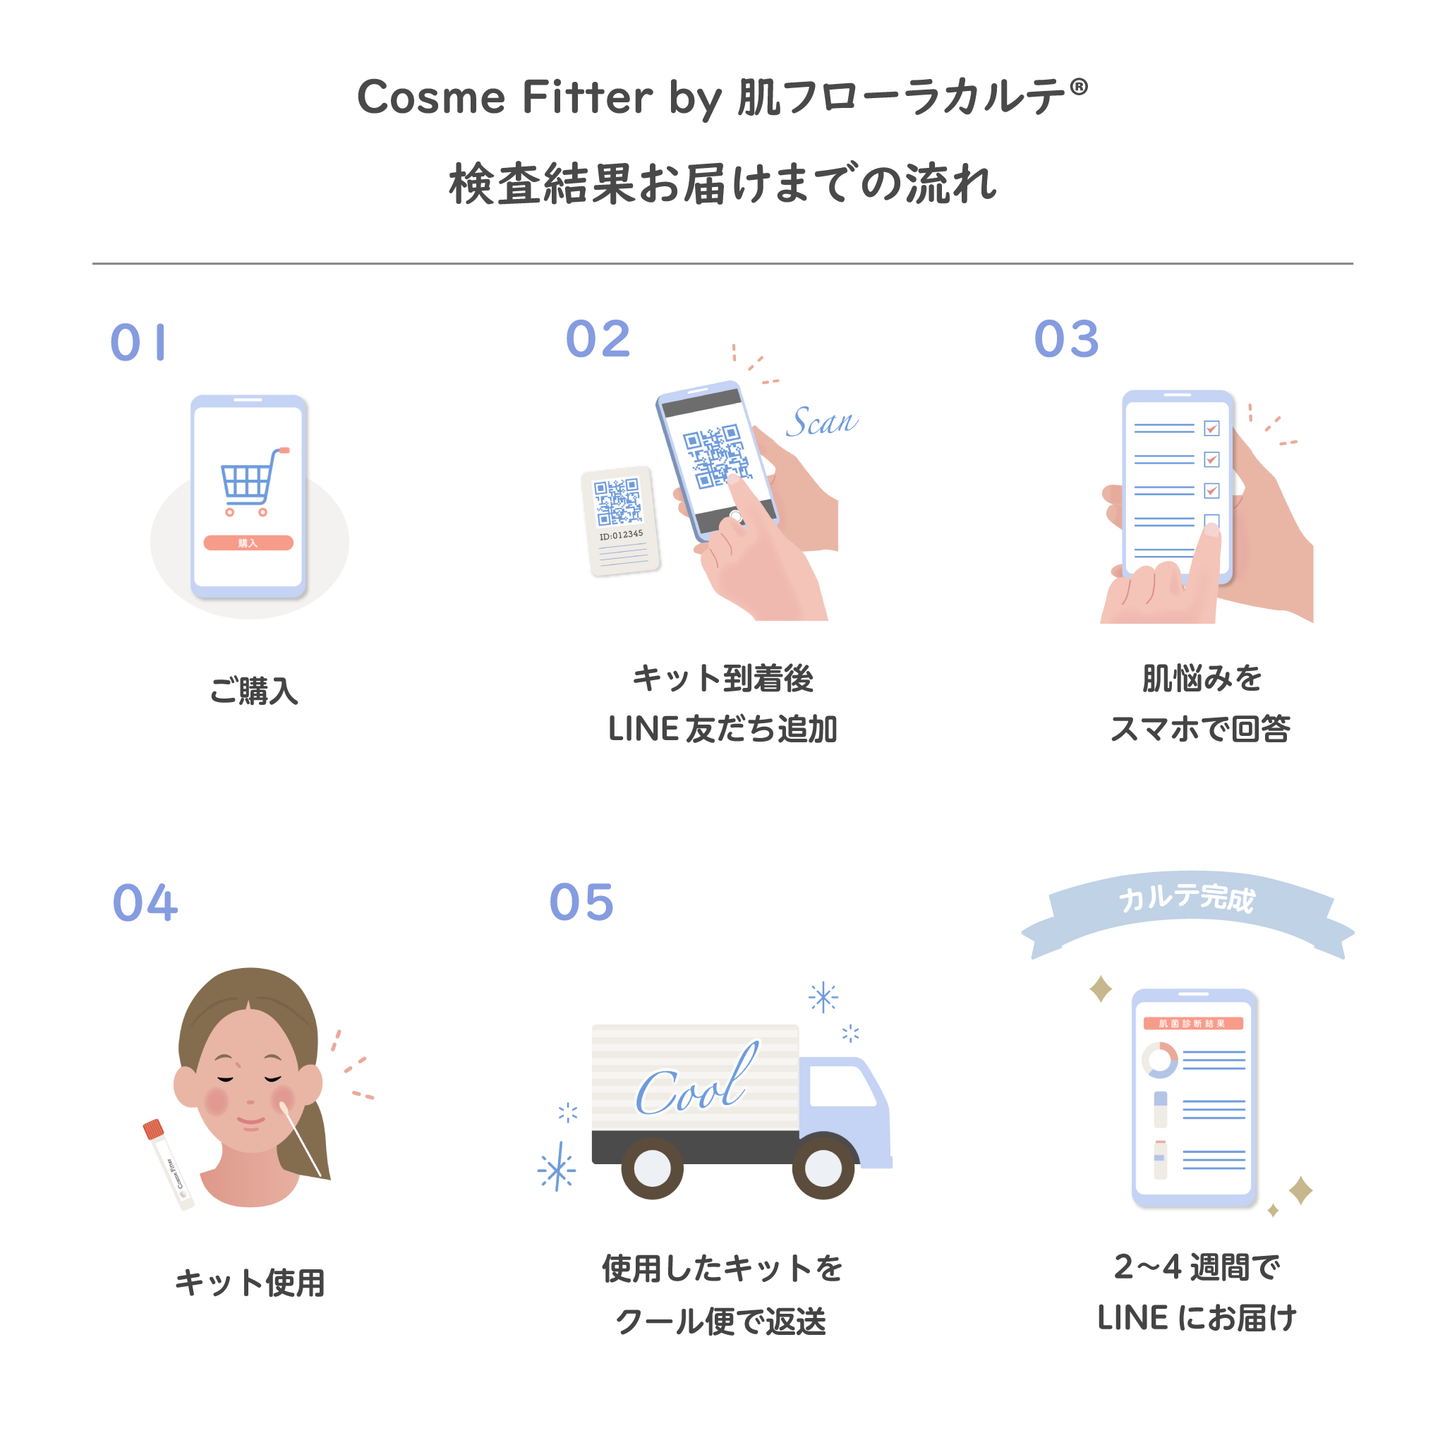 Cosme Fitter by 肌フローラカルテ®オンラインカウンセリング付き